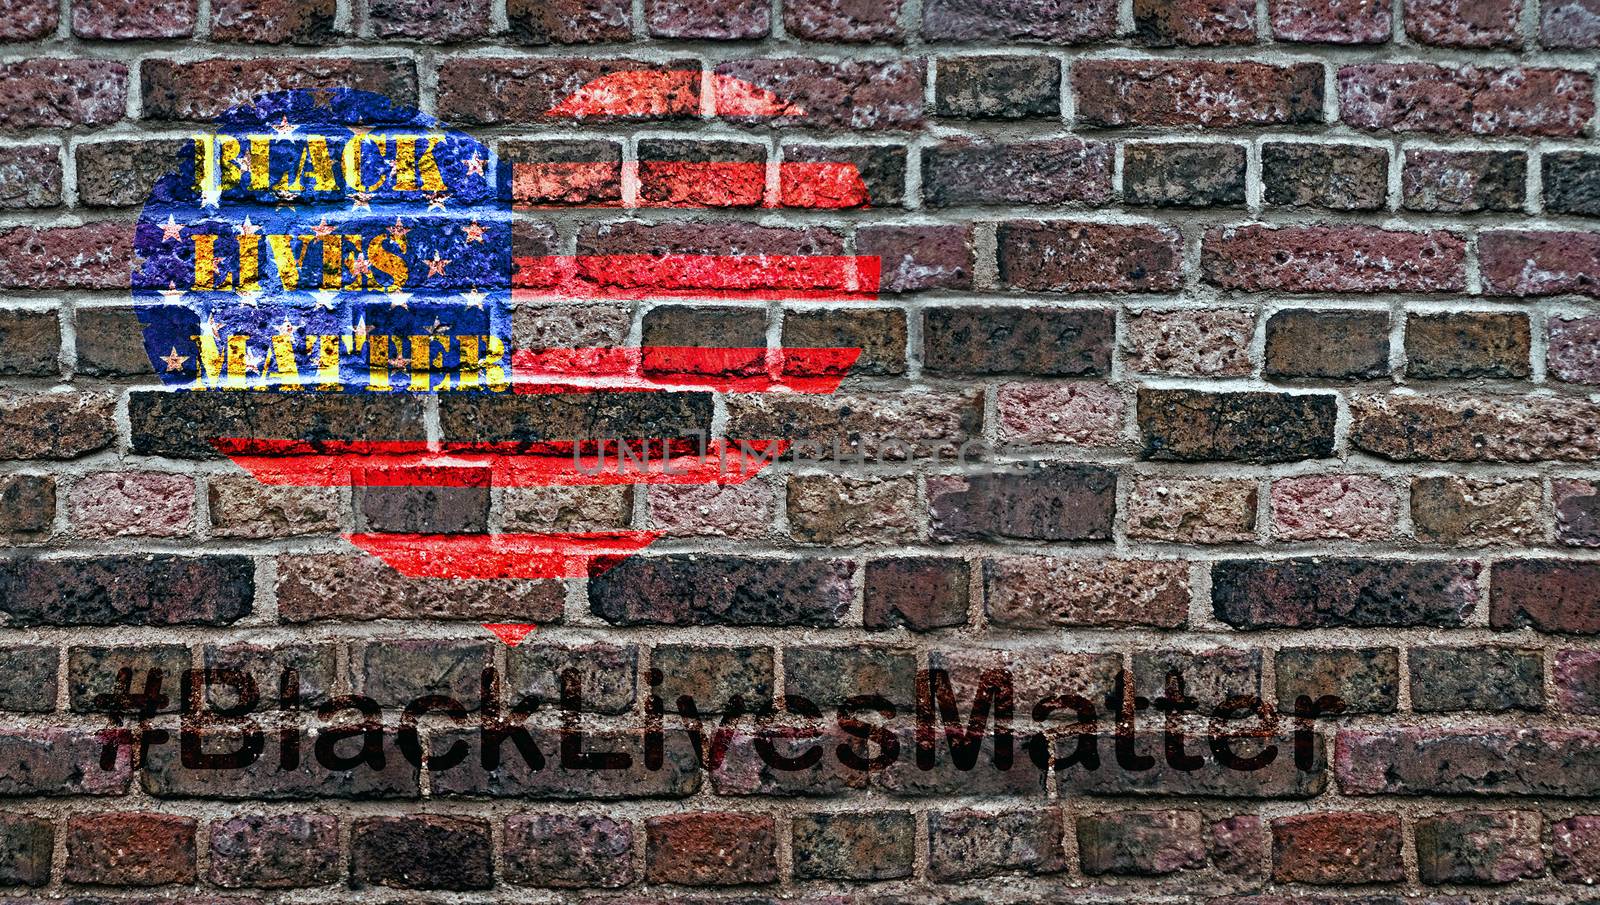 Black Lives Matter hashtag slogan brick wall by Vladyslav